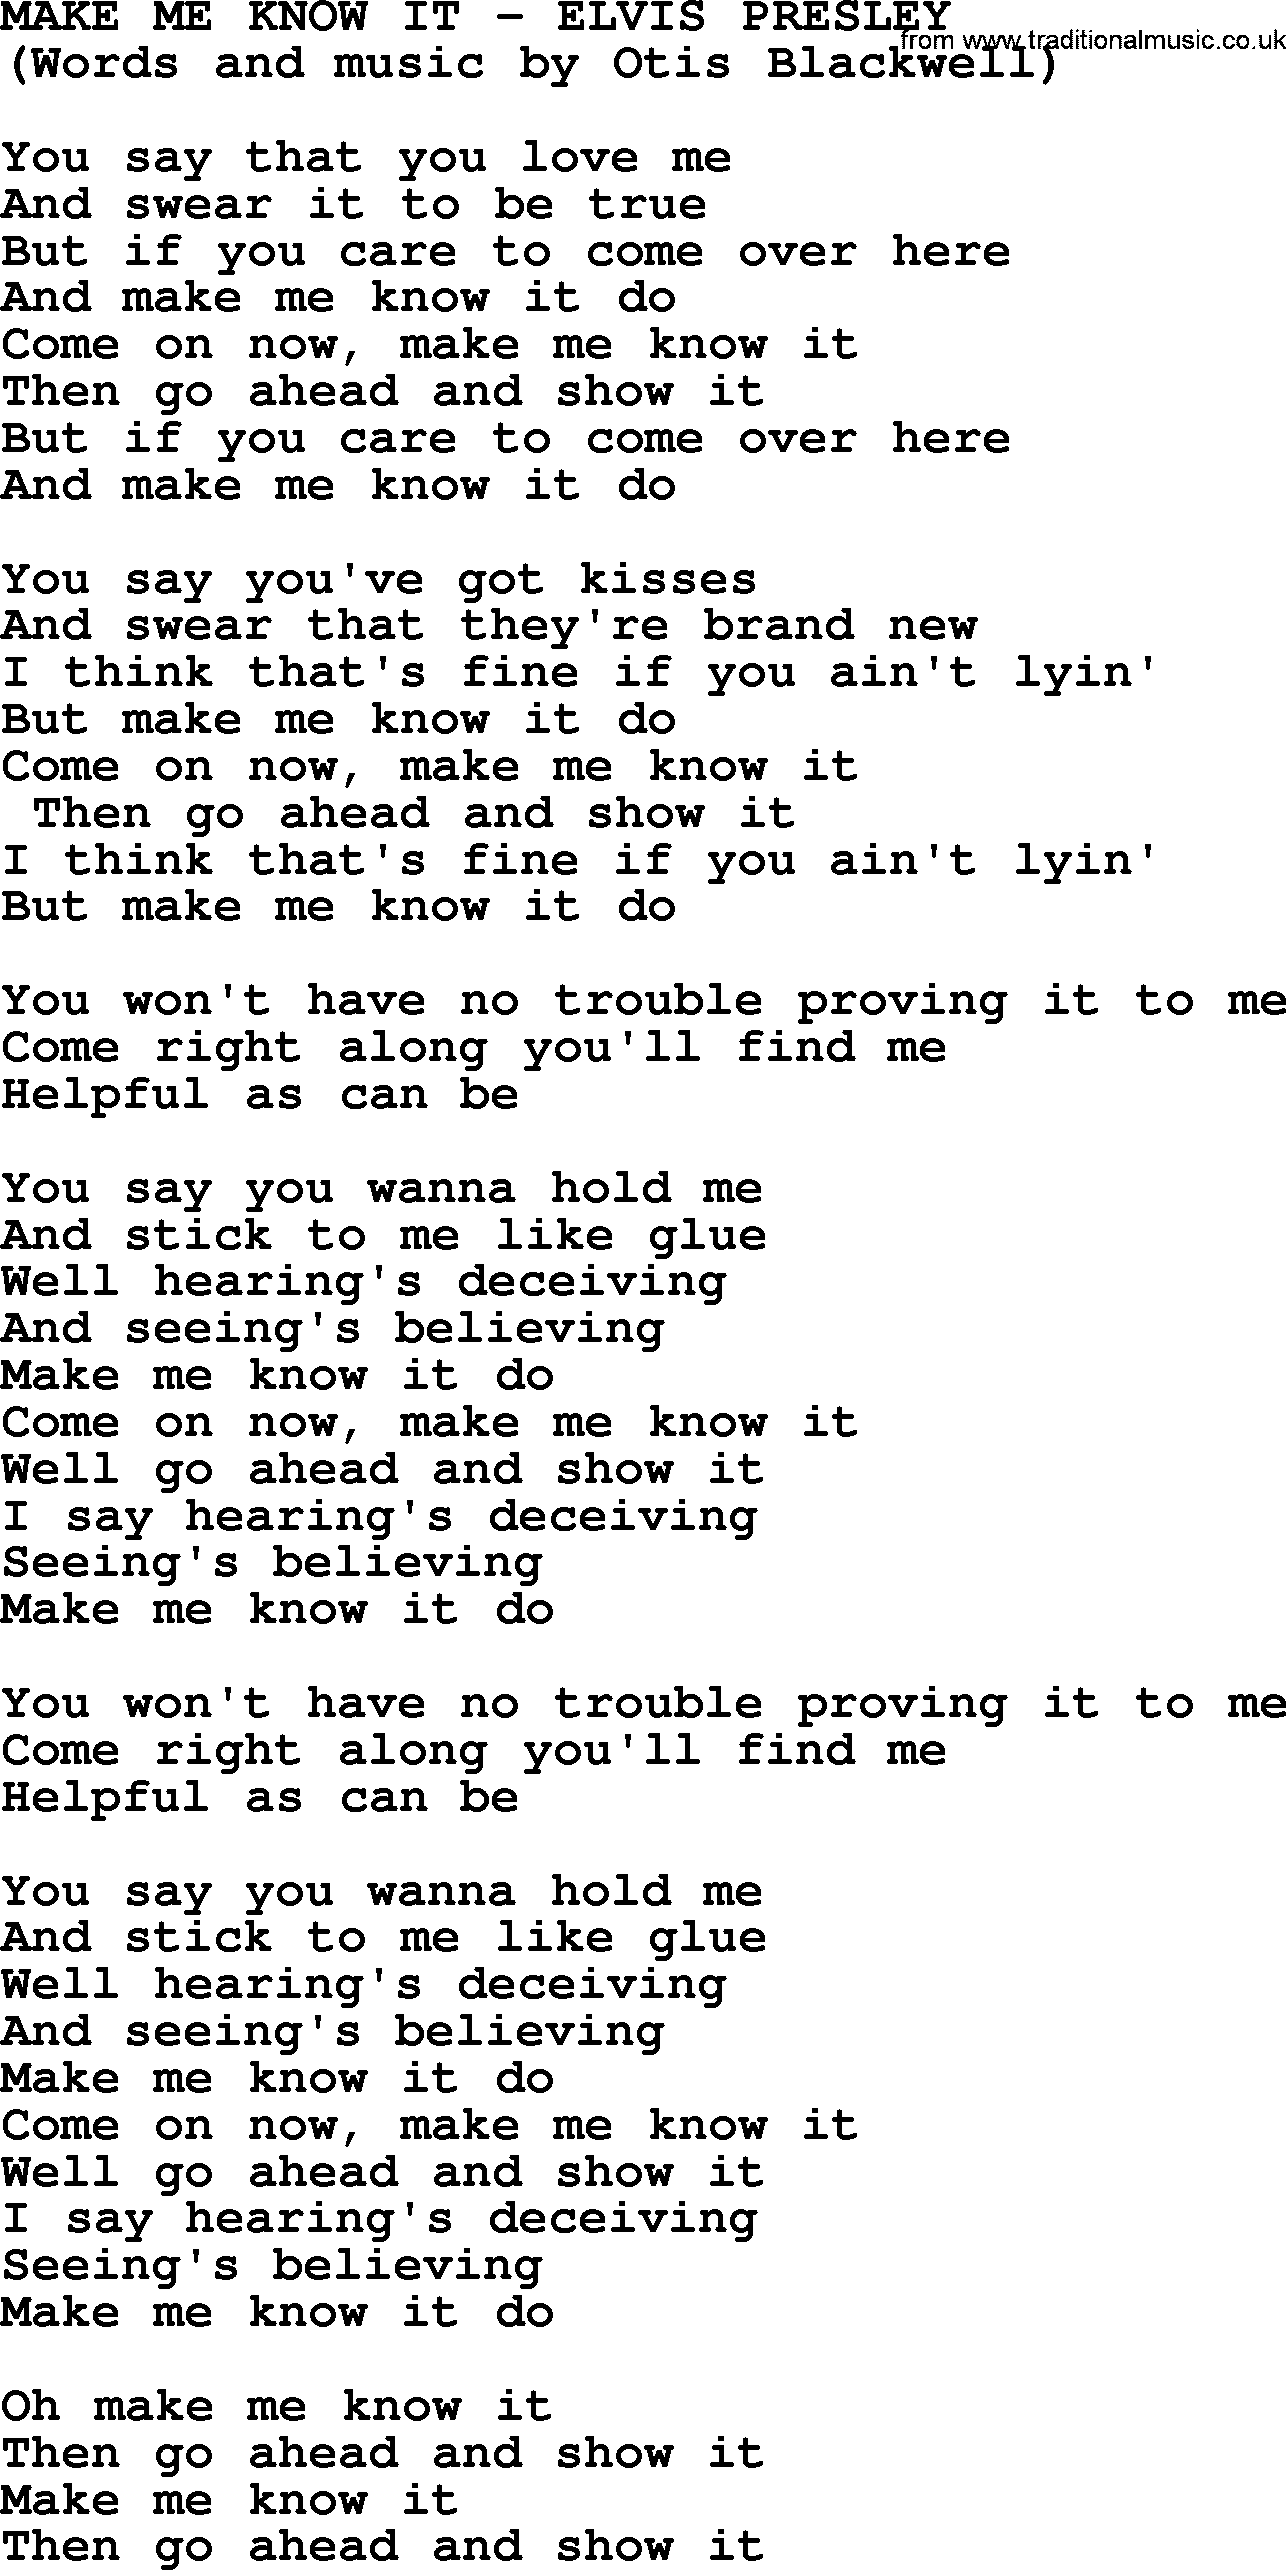 Elvis Presley song: Make Me Know It lyrics